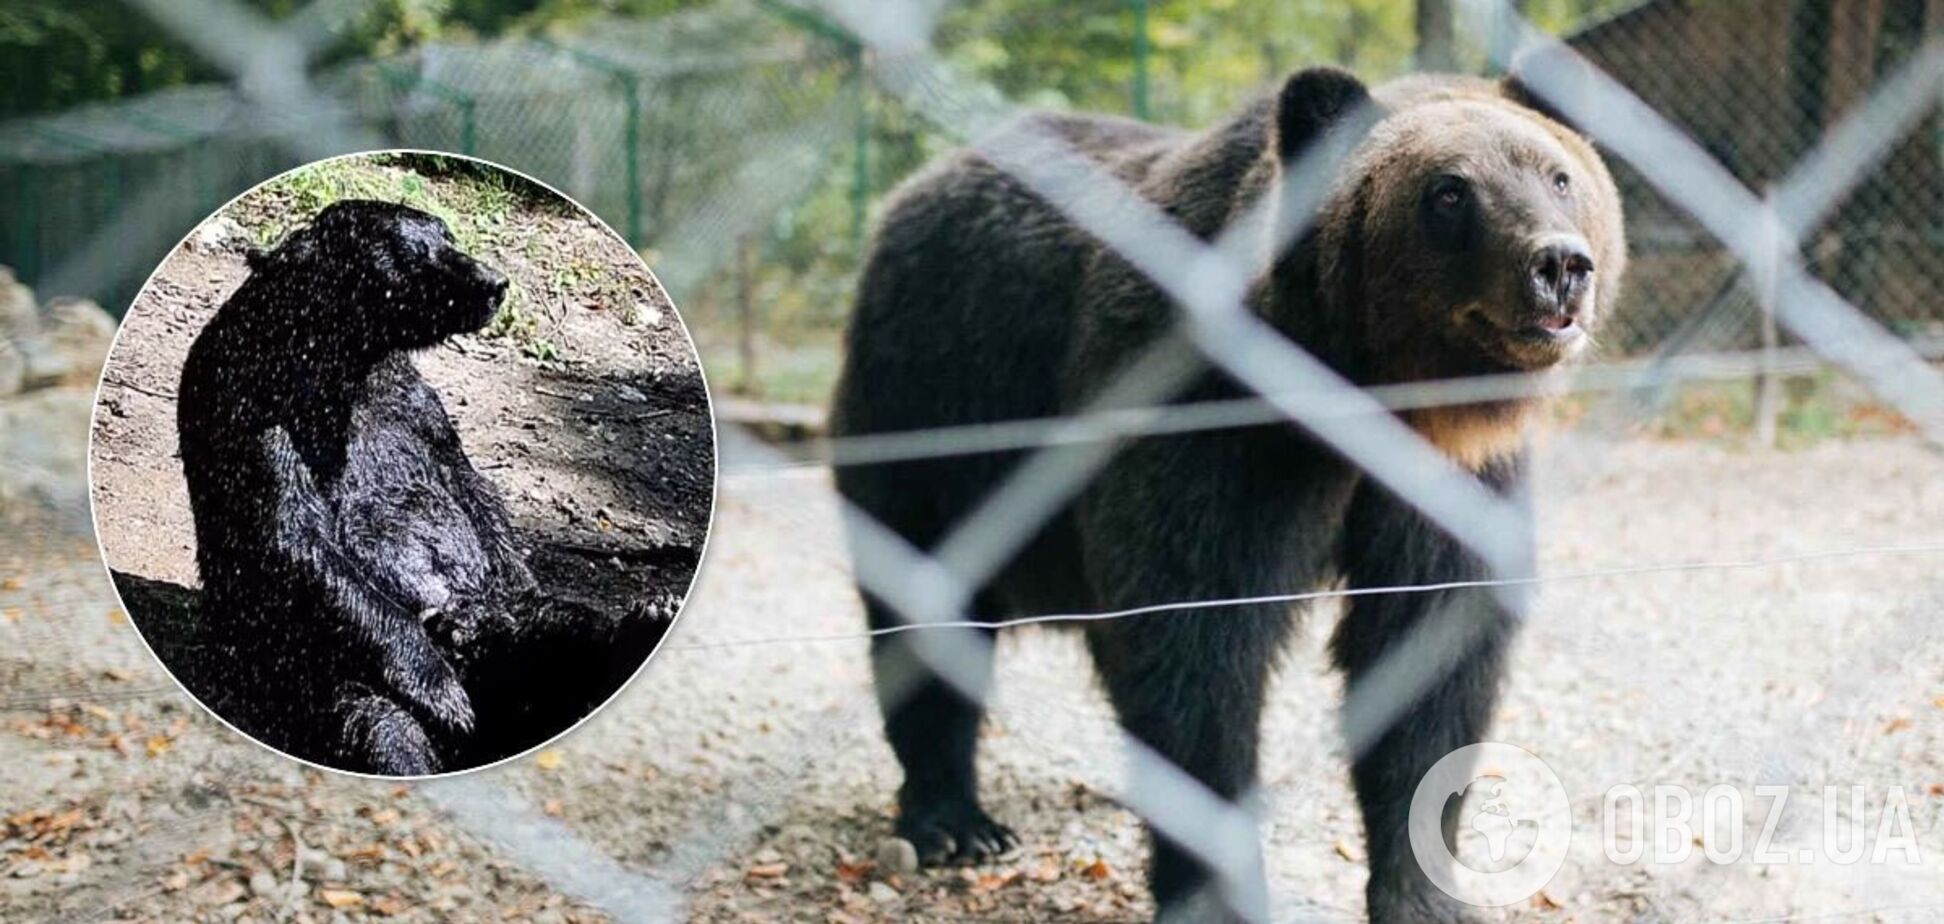 Видео с принимающим душ украинским медведем стало вирусным